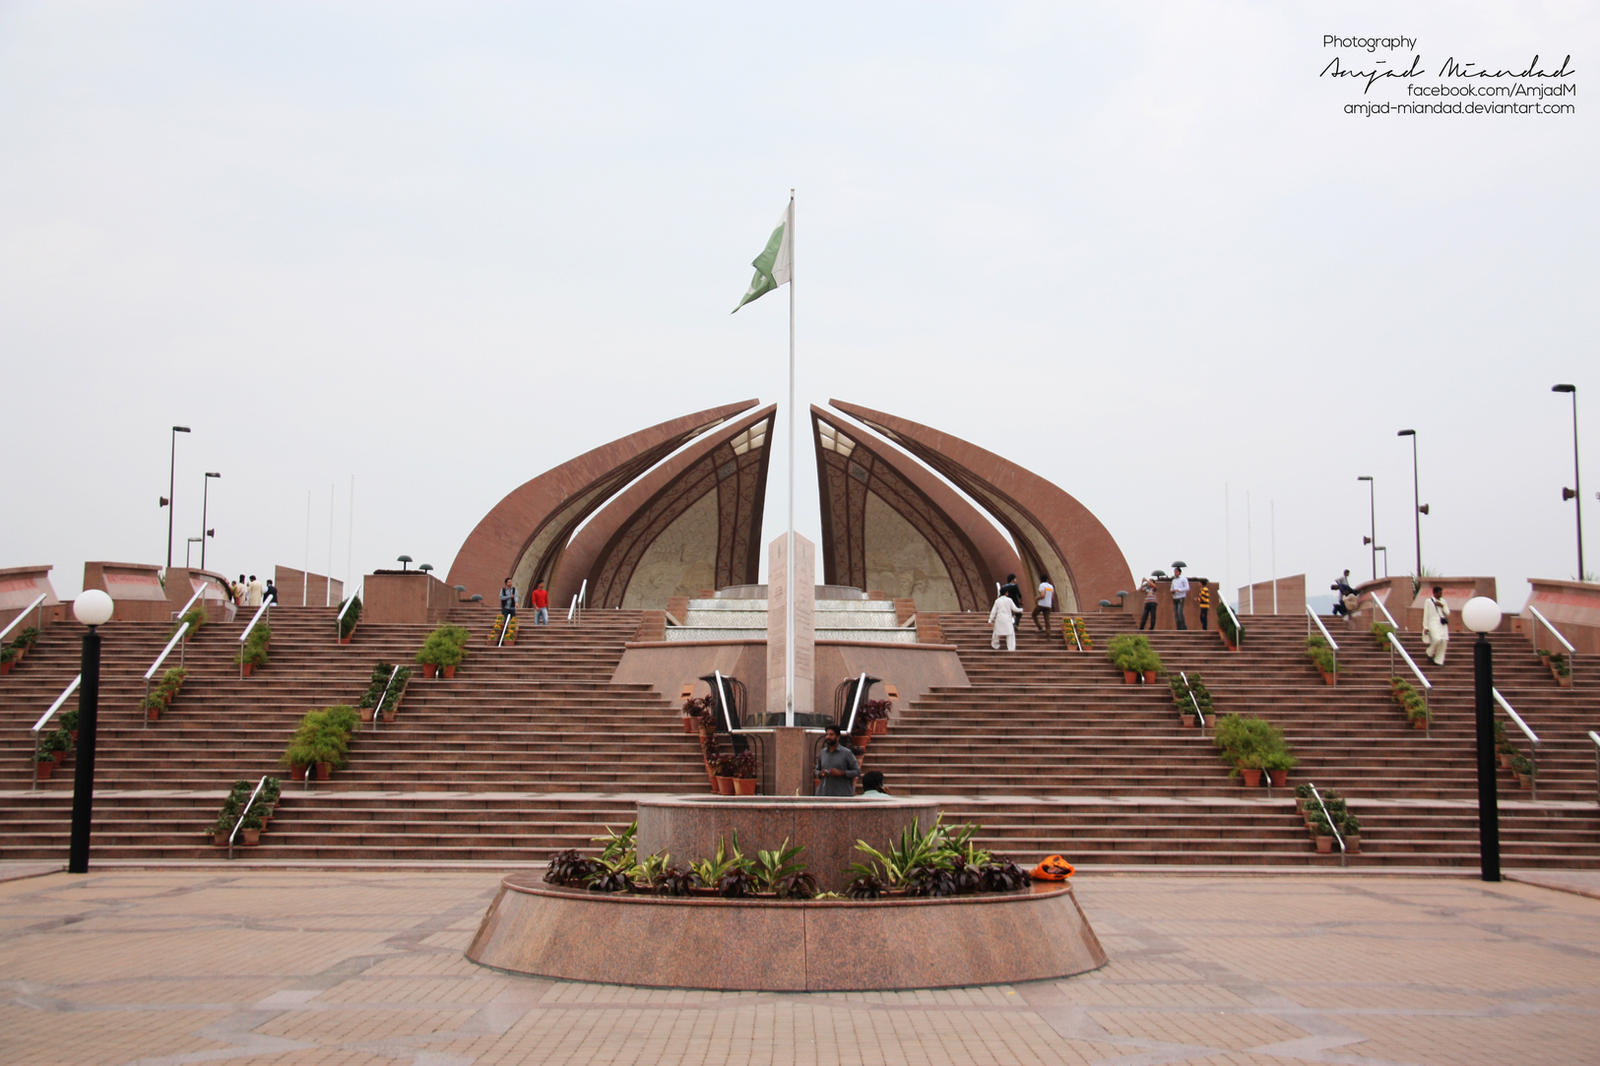 pakistan_monument_front_view_by_amjad_miandad-d6shxb1.jpg